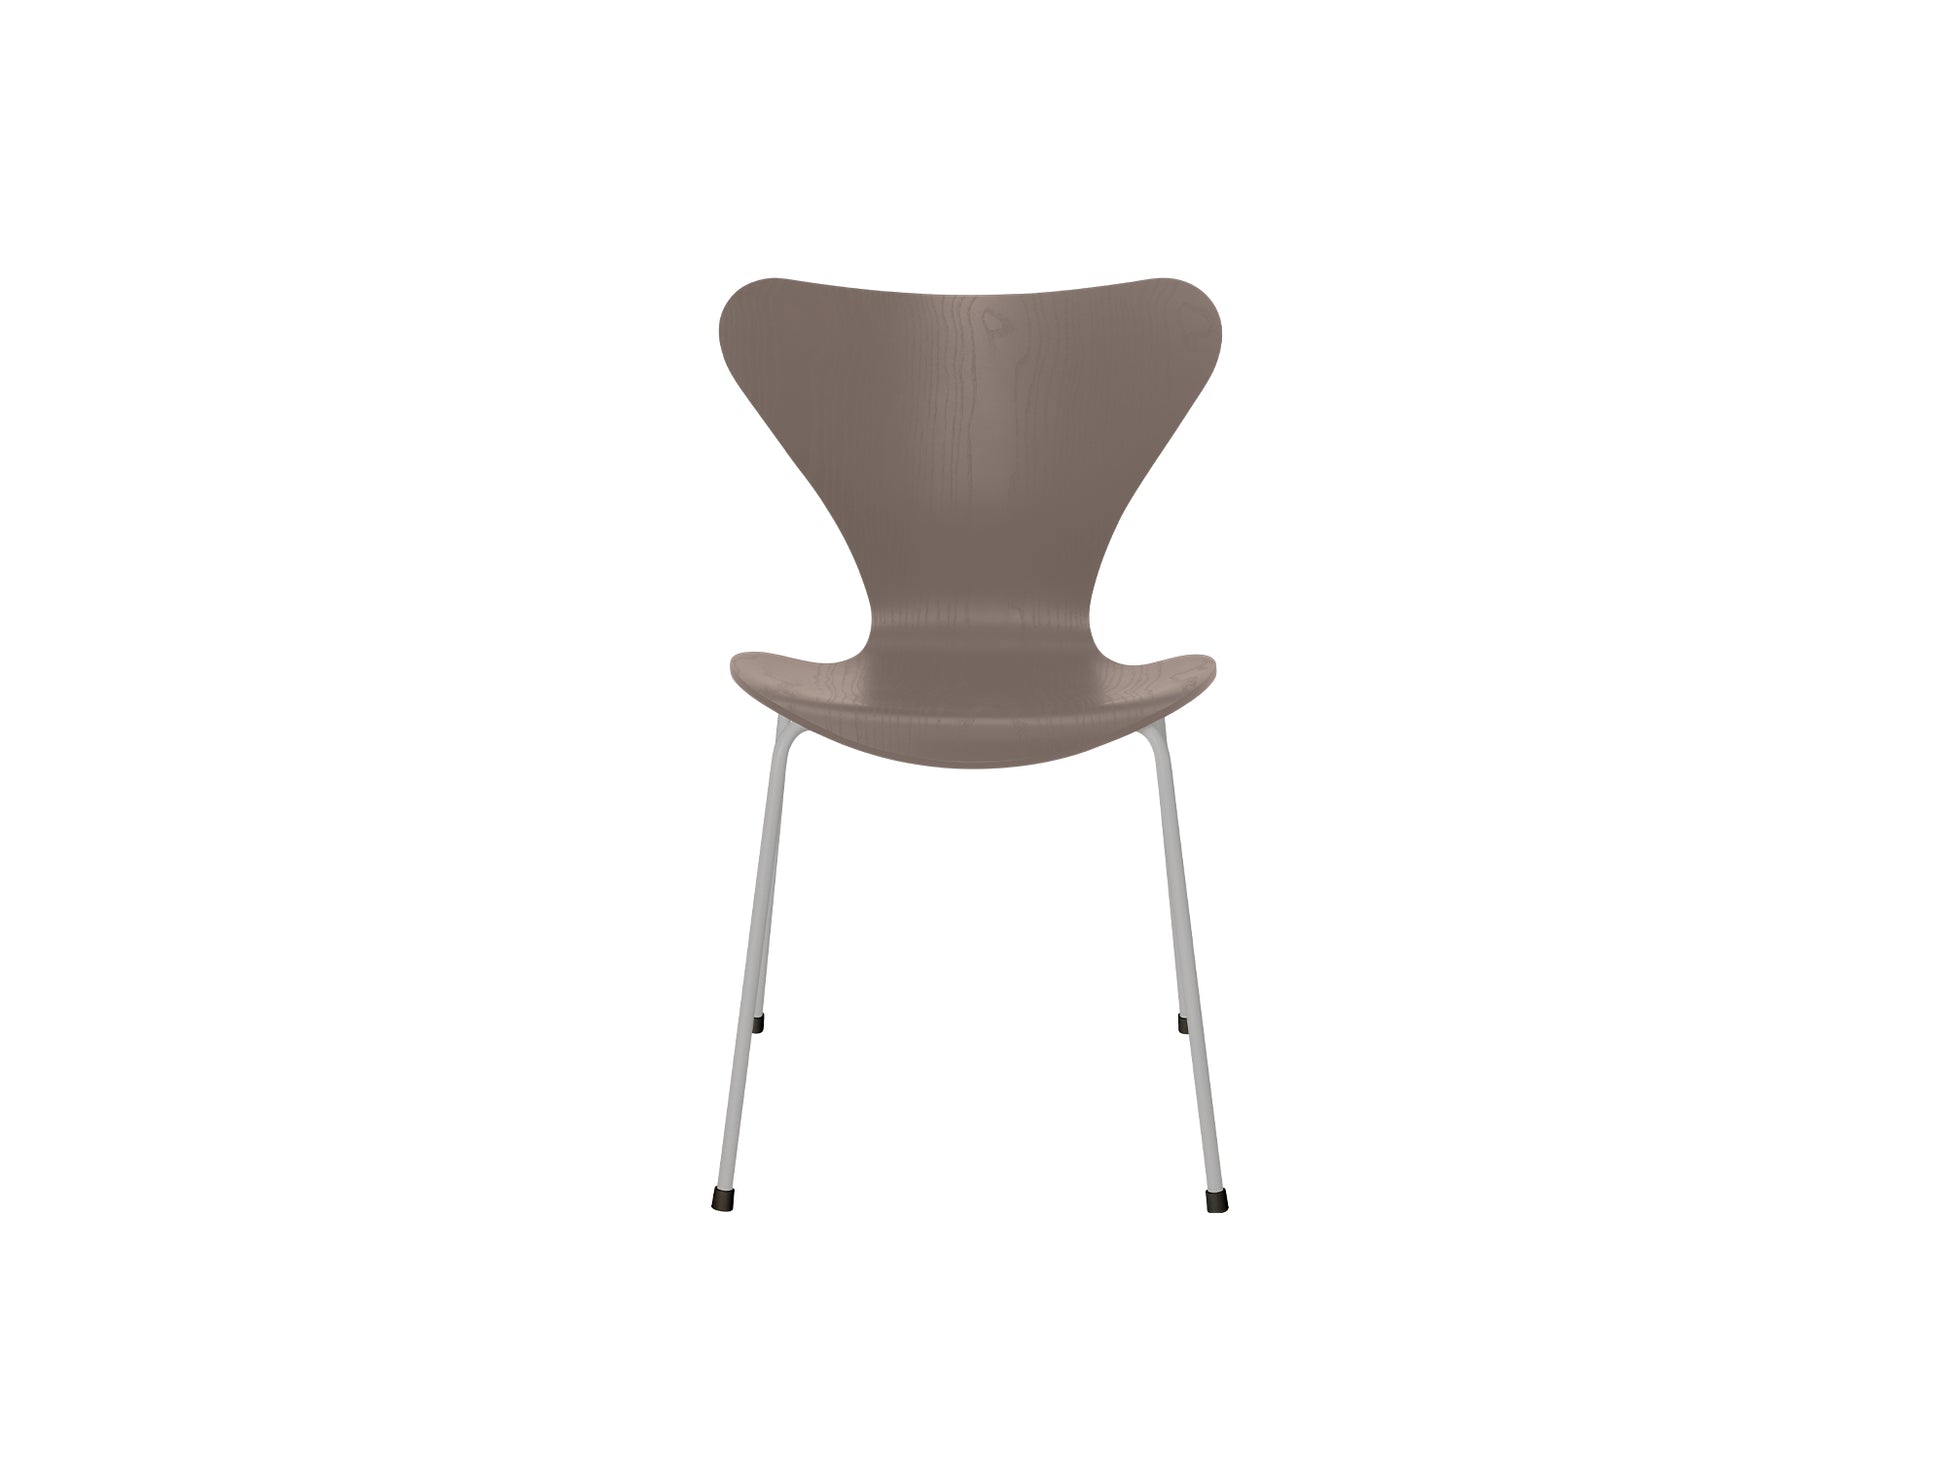 Series 7™ 3107 Dining Chair by Fritz Hansen - Deep Clay Coloured Ash Veneer Shell / Nine Grey Steel